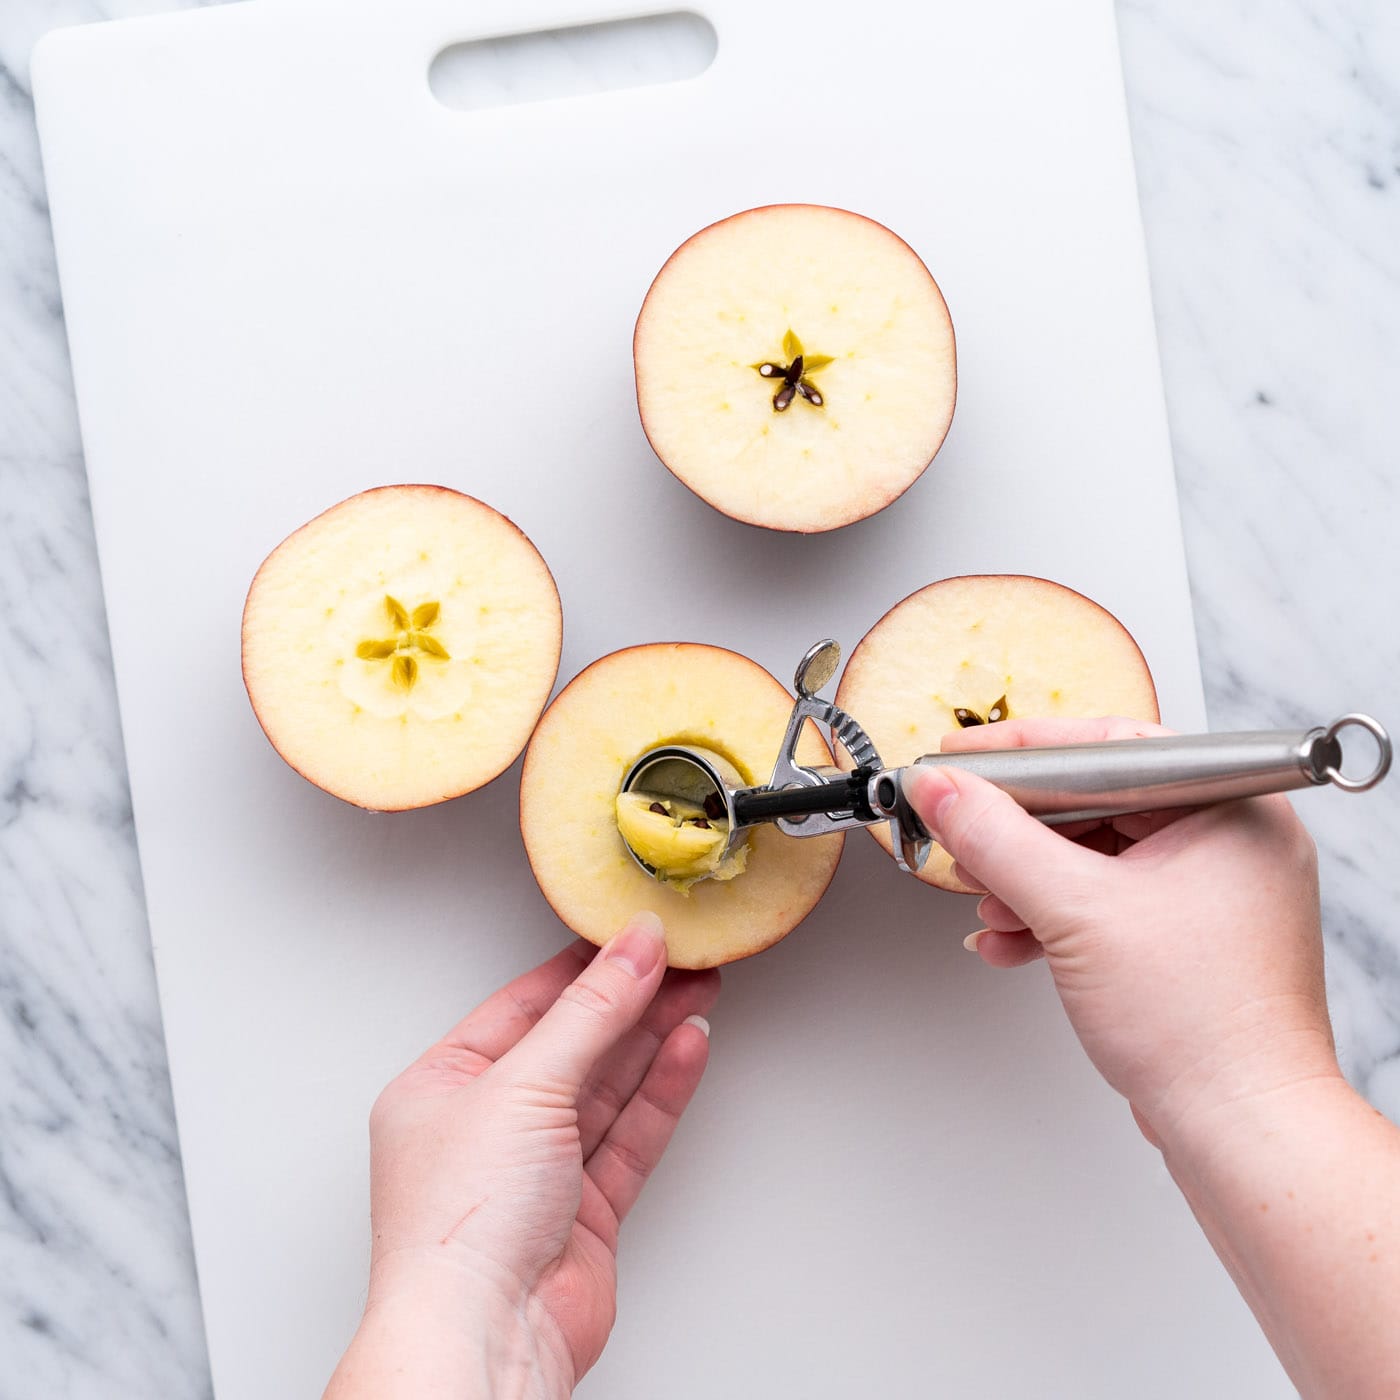 coring apple halves on cutting board